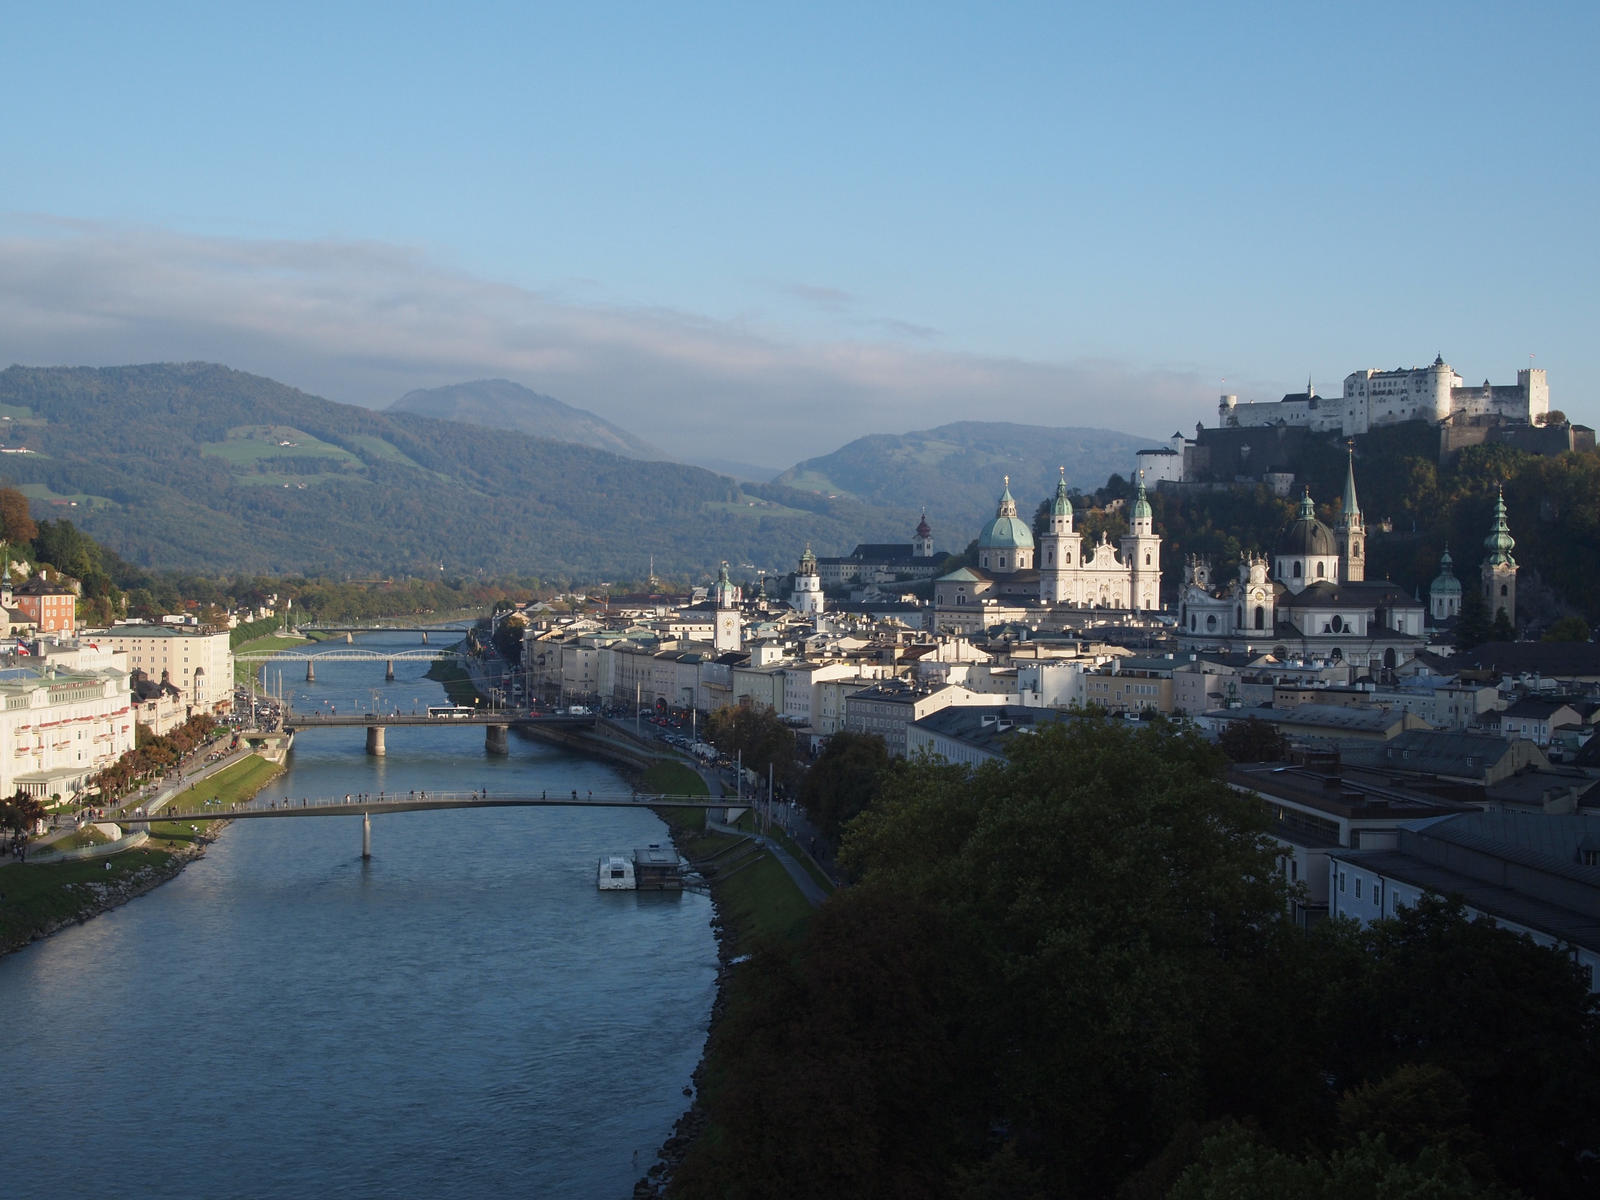 City of Salzburg 2nd